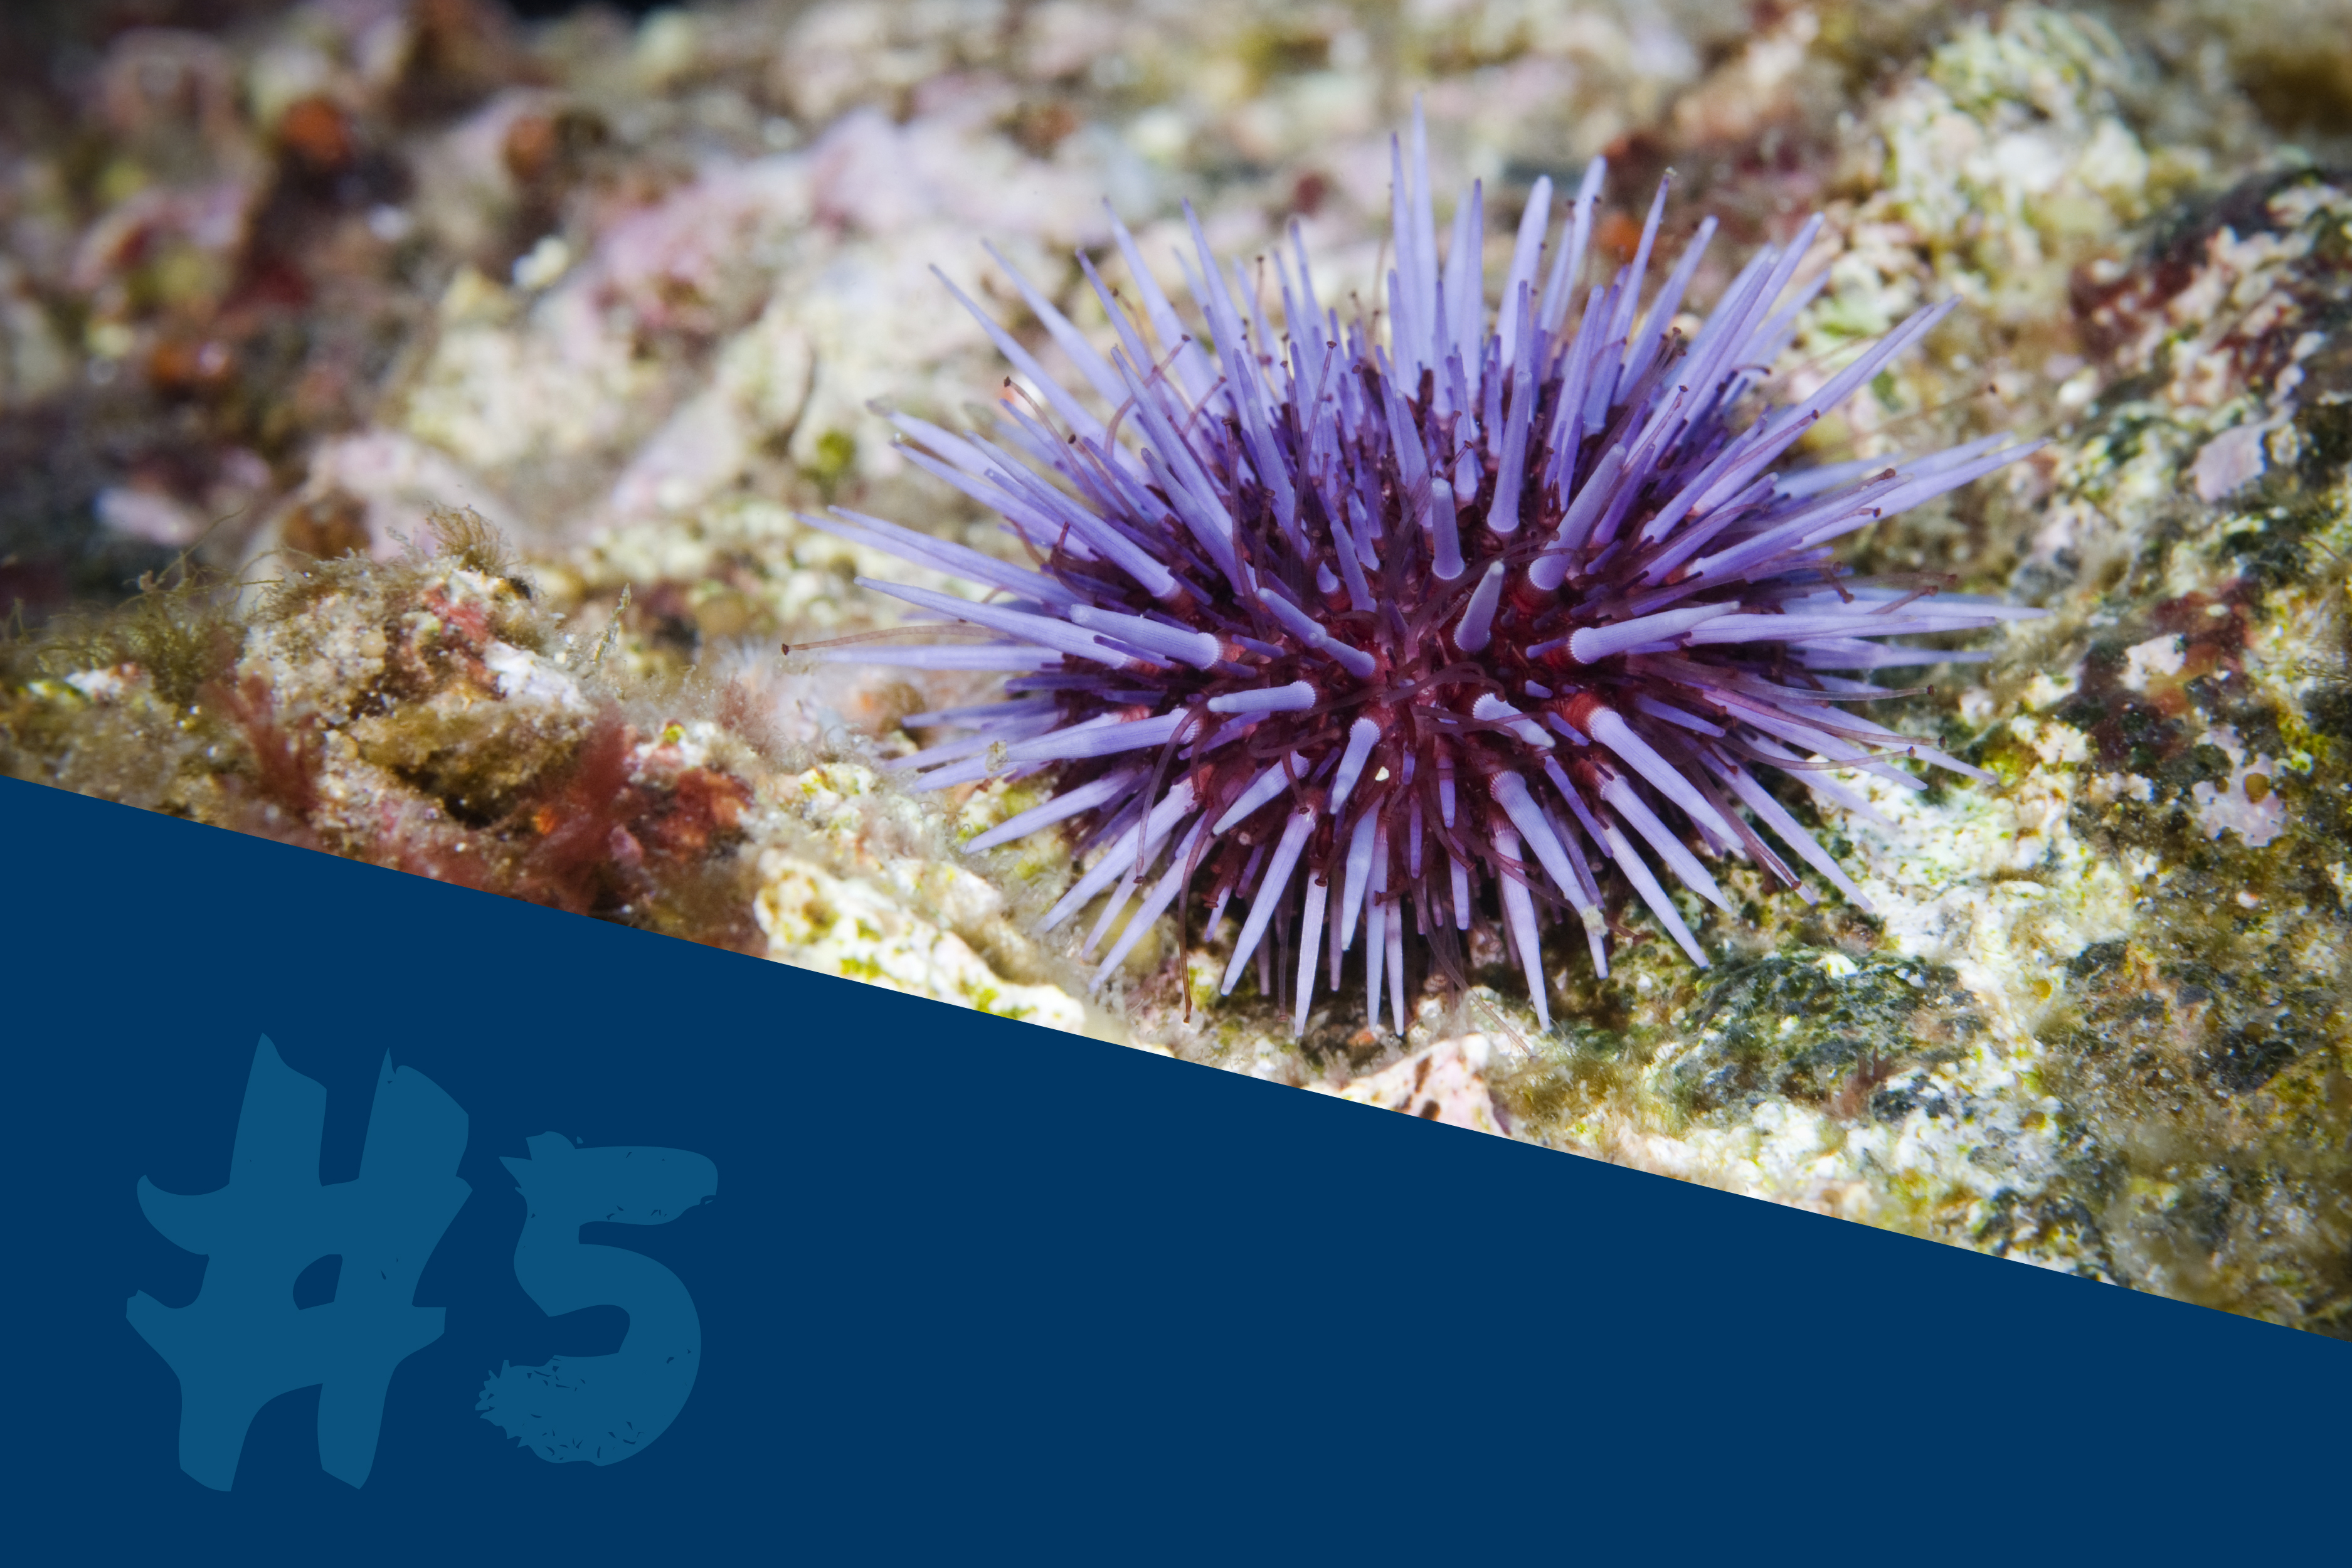 Purple Sea Urchin